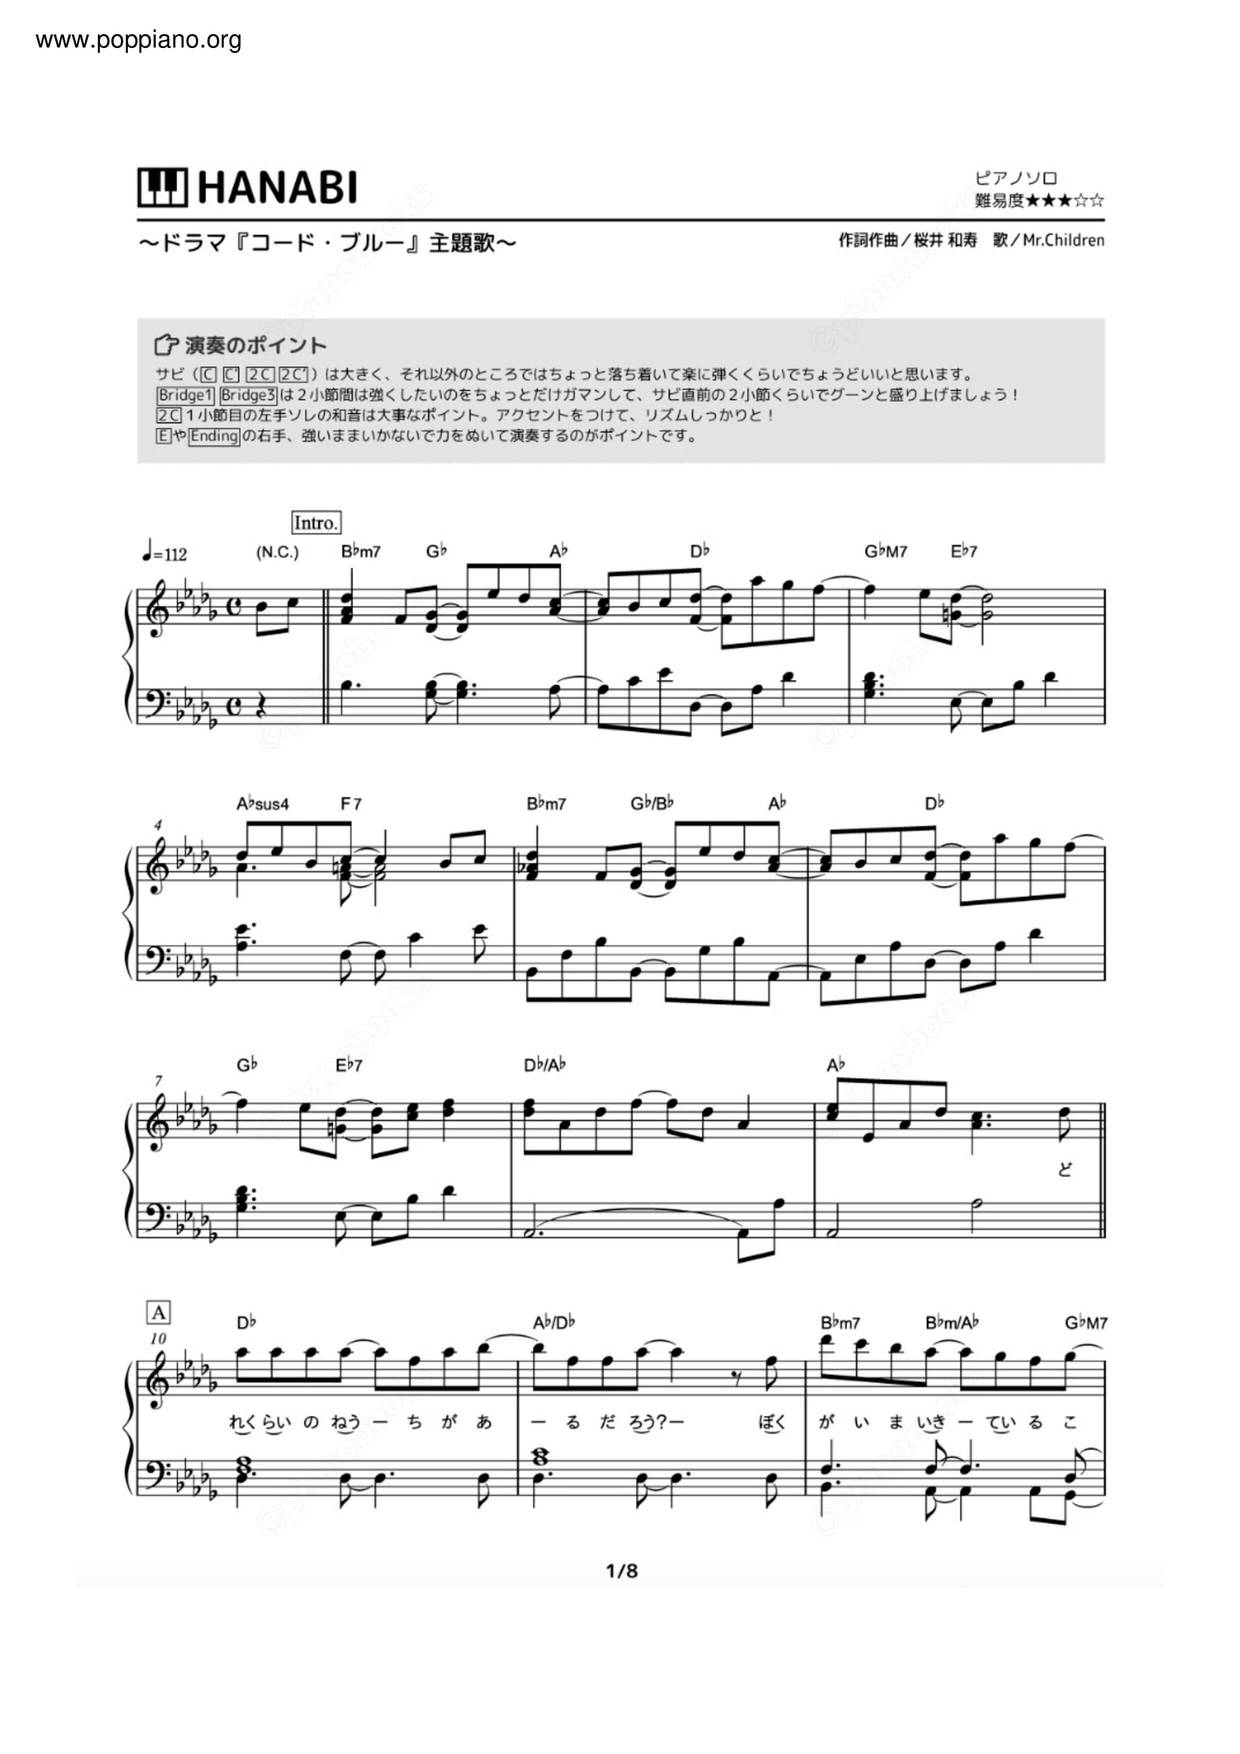 Mr Children Hanabi Sheet Music Pdf ミスチル Free Score Download